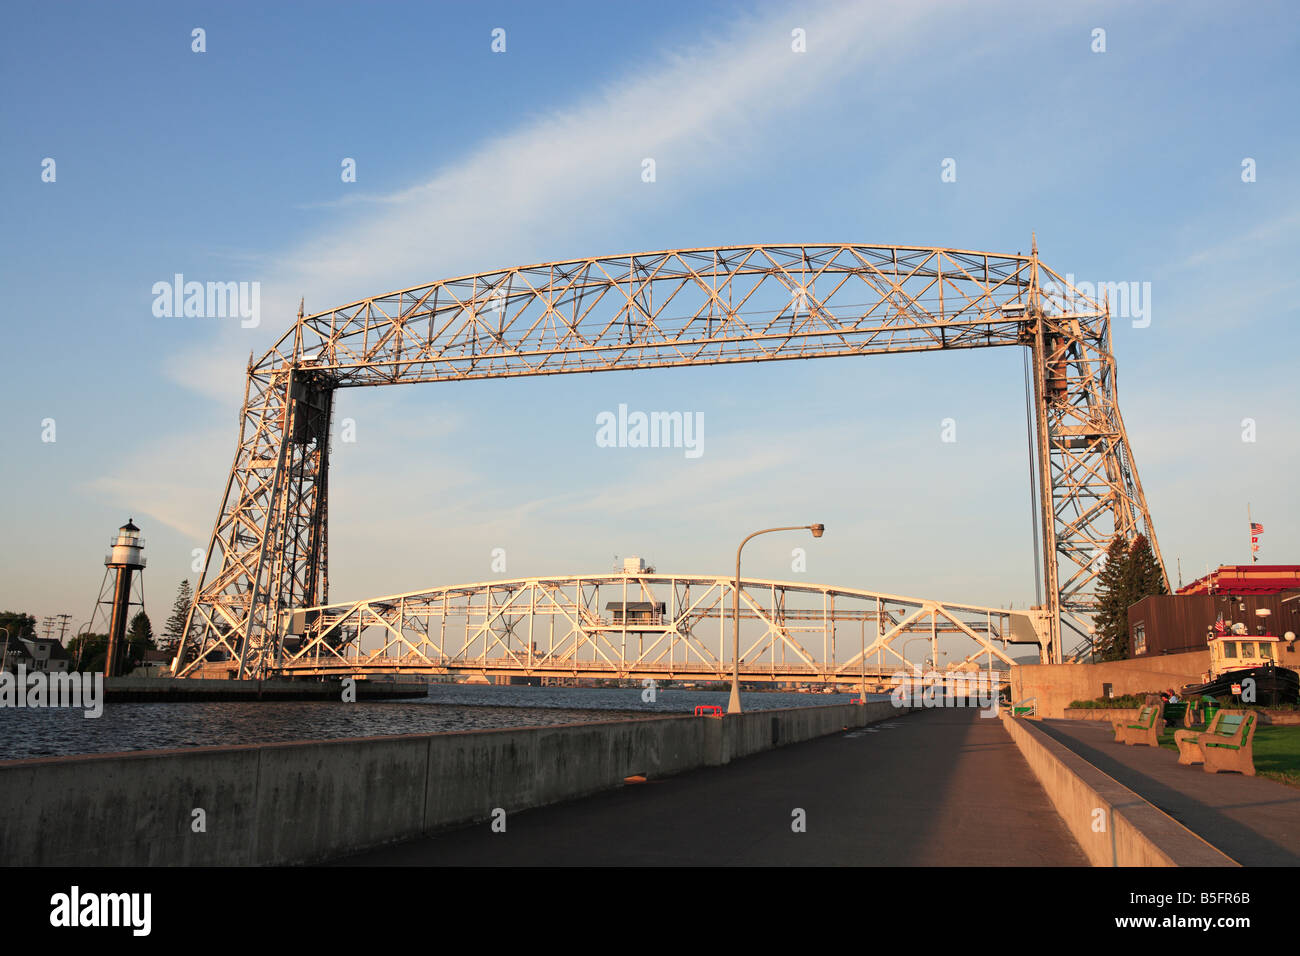 The landmark aerial lift bridge in Duluth, Minnesota. Stock Photo